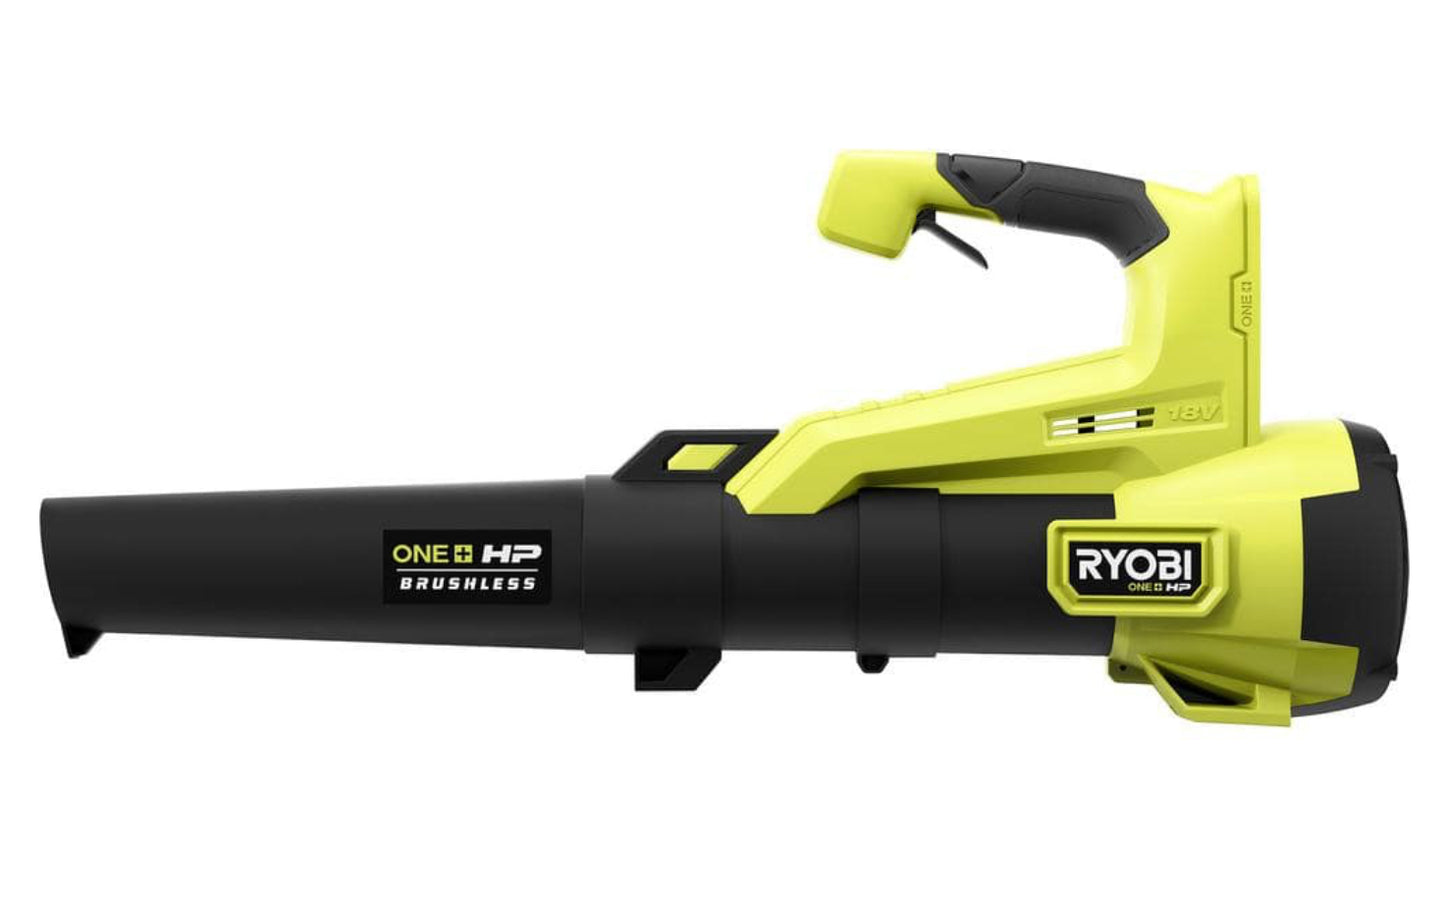 RYOBI ONE+ HP 18V Brushless 110 MPH 350 CFM Cordless Variable-Speed Jet Fan Leaf Blower (Tool Only) - Damaged Box